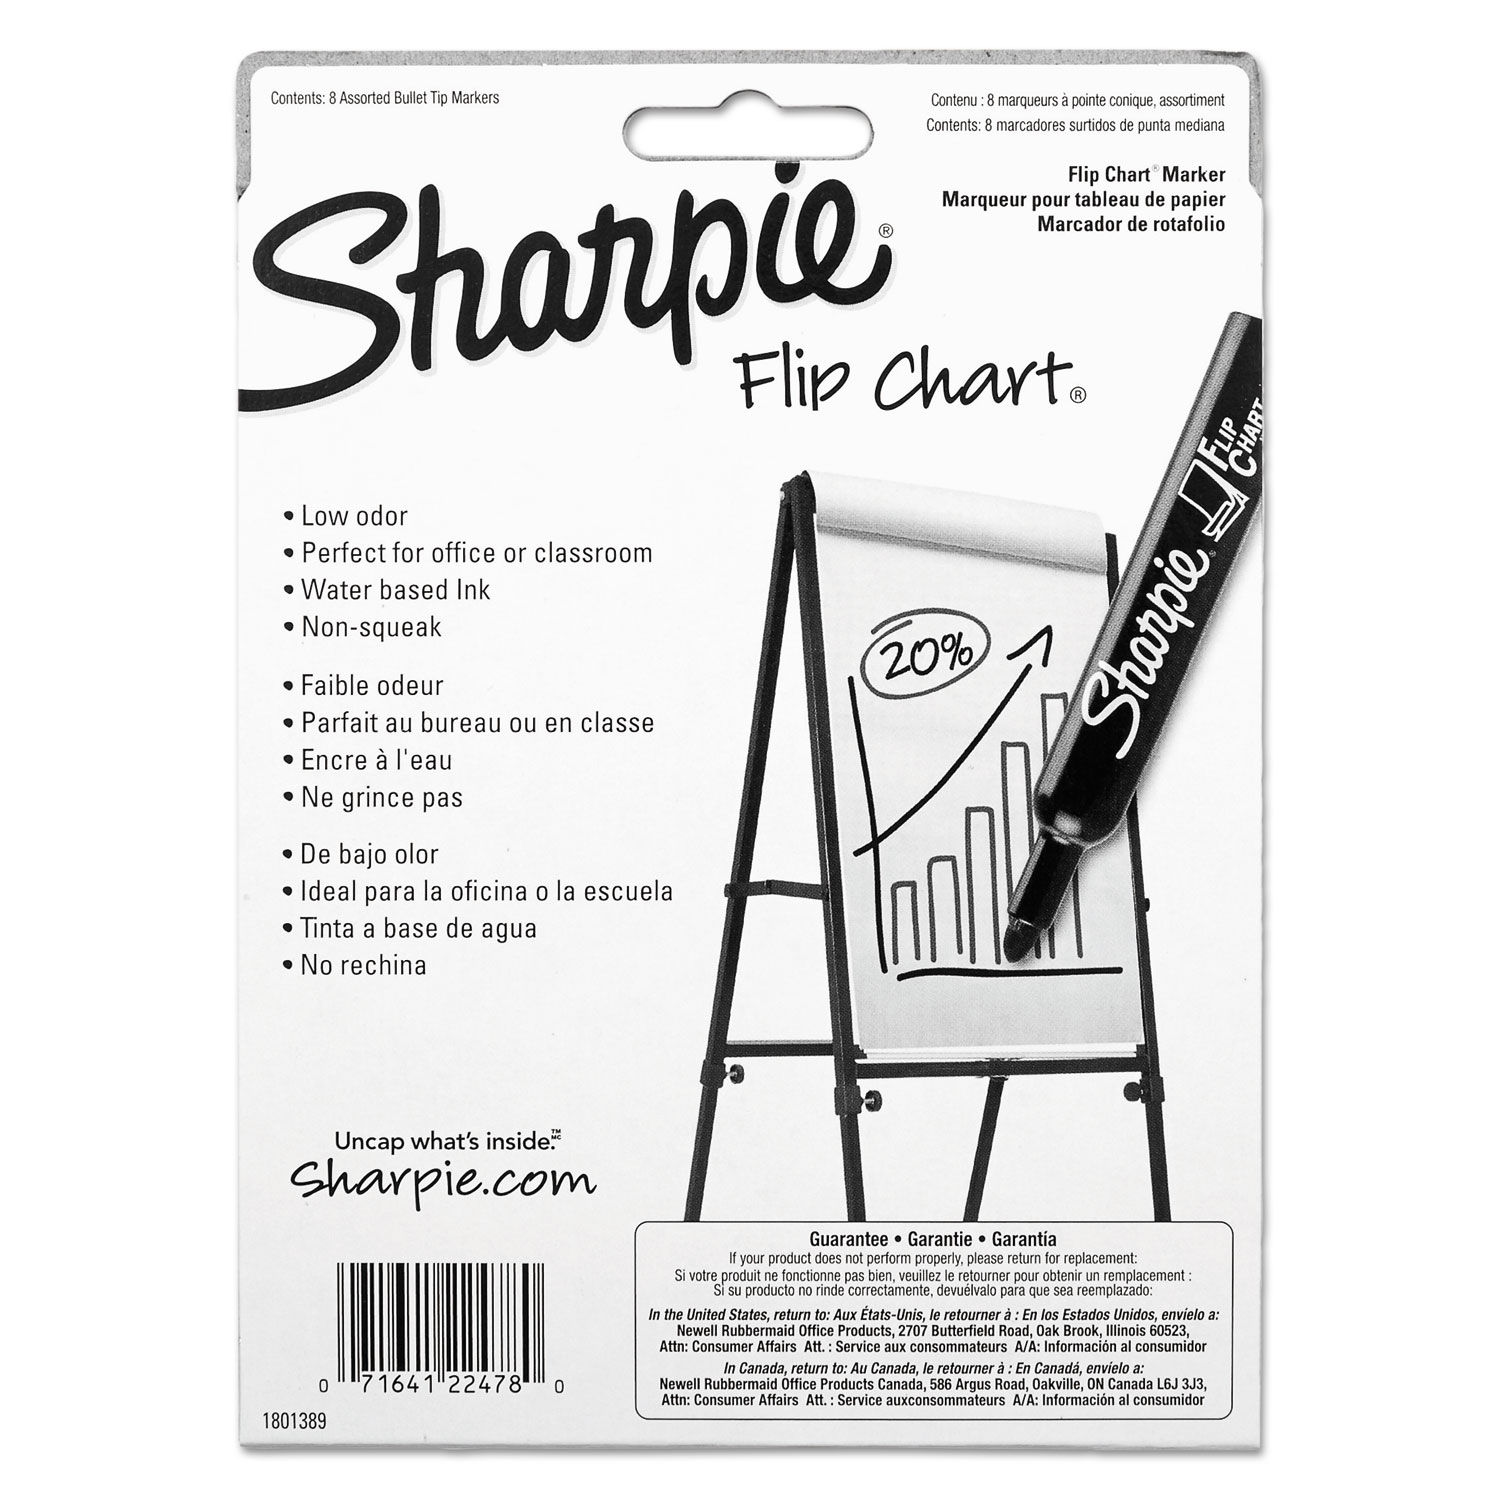 Sharpie Flip Chart